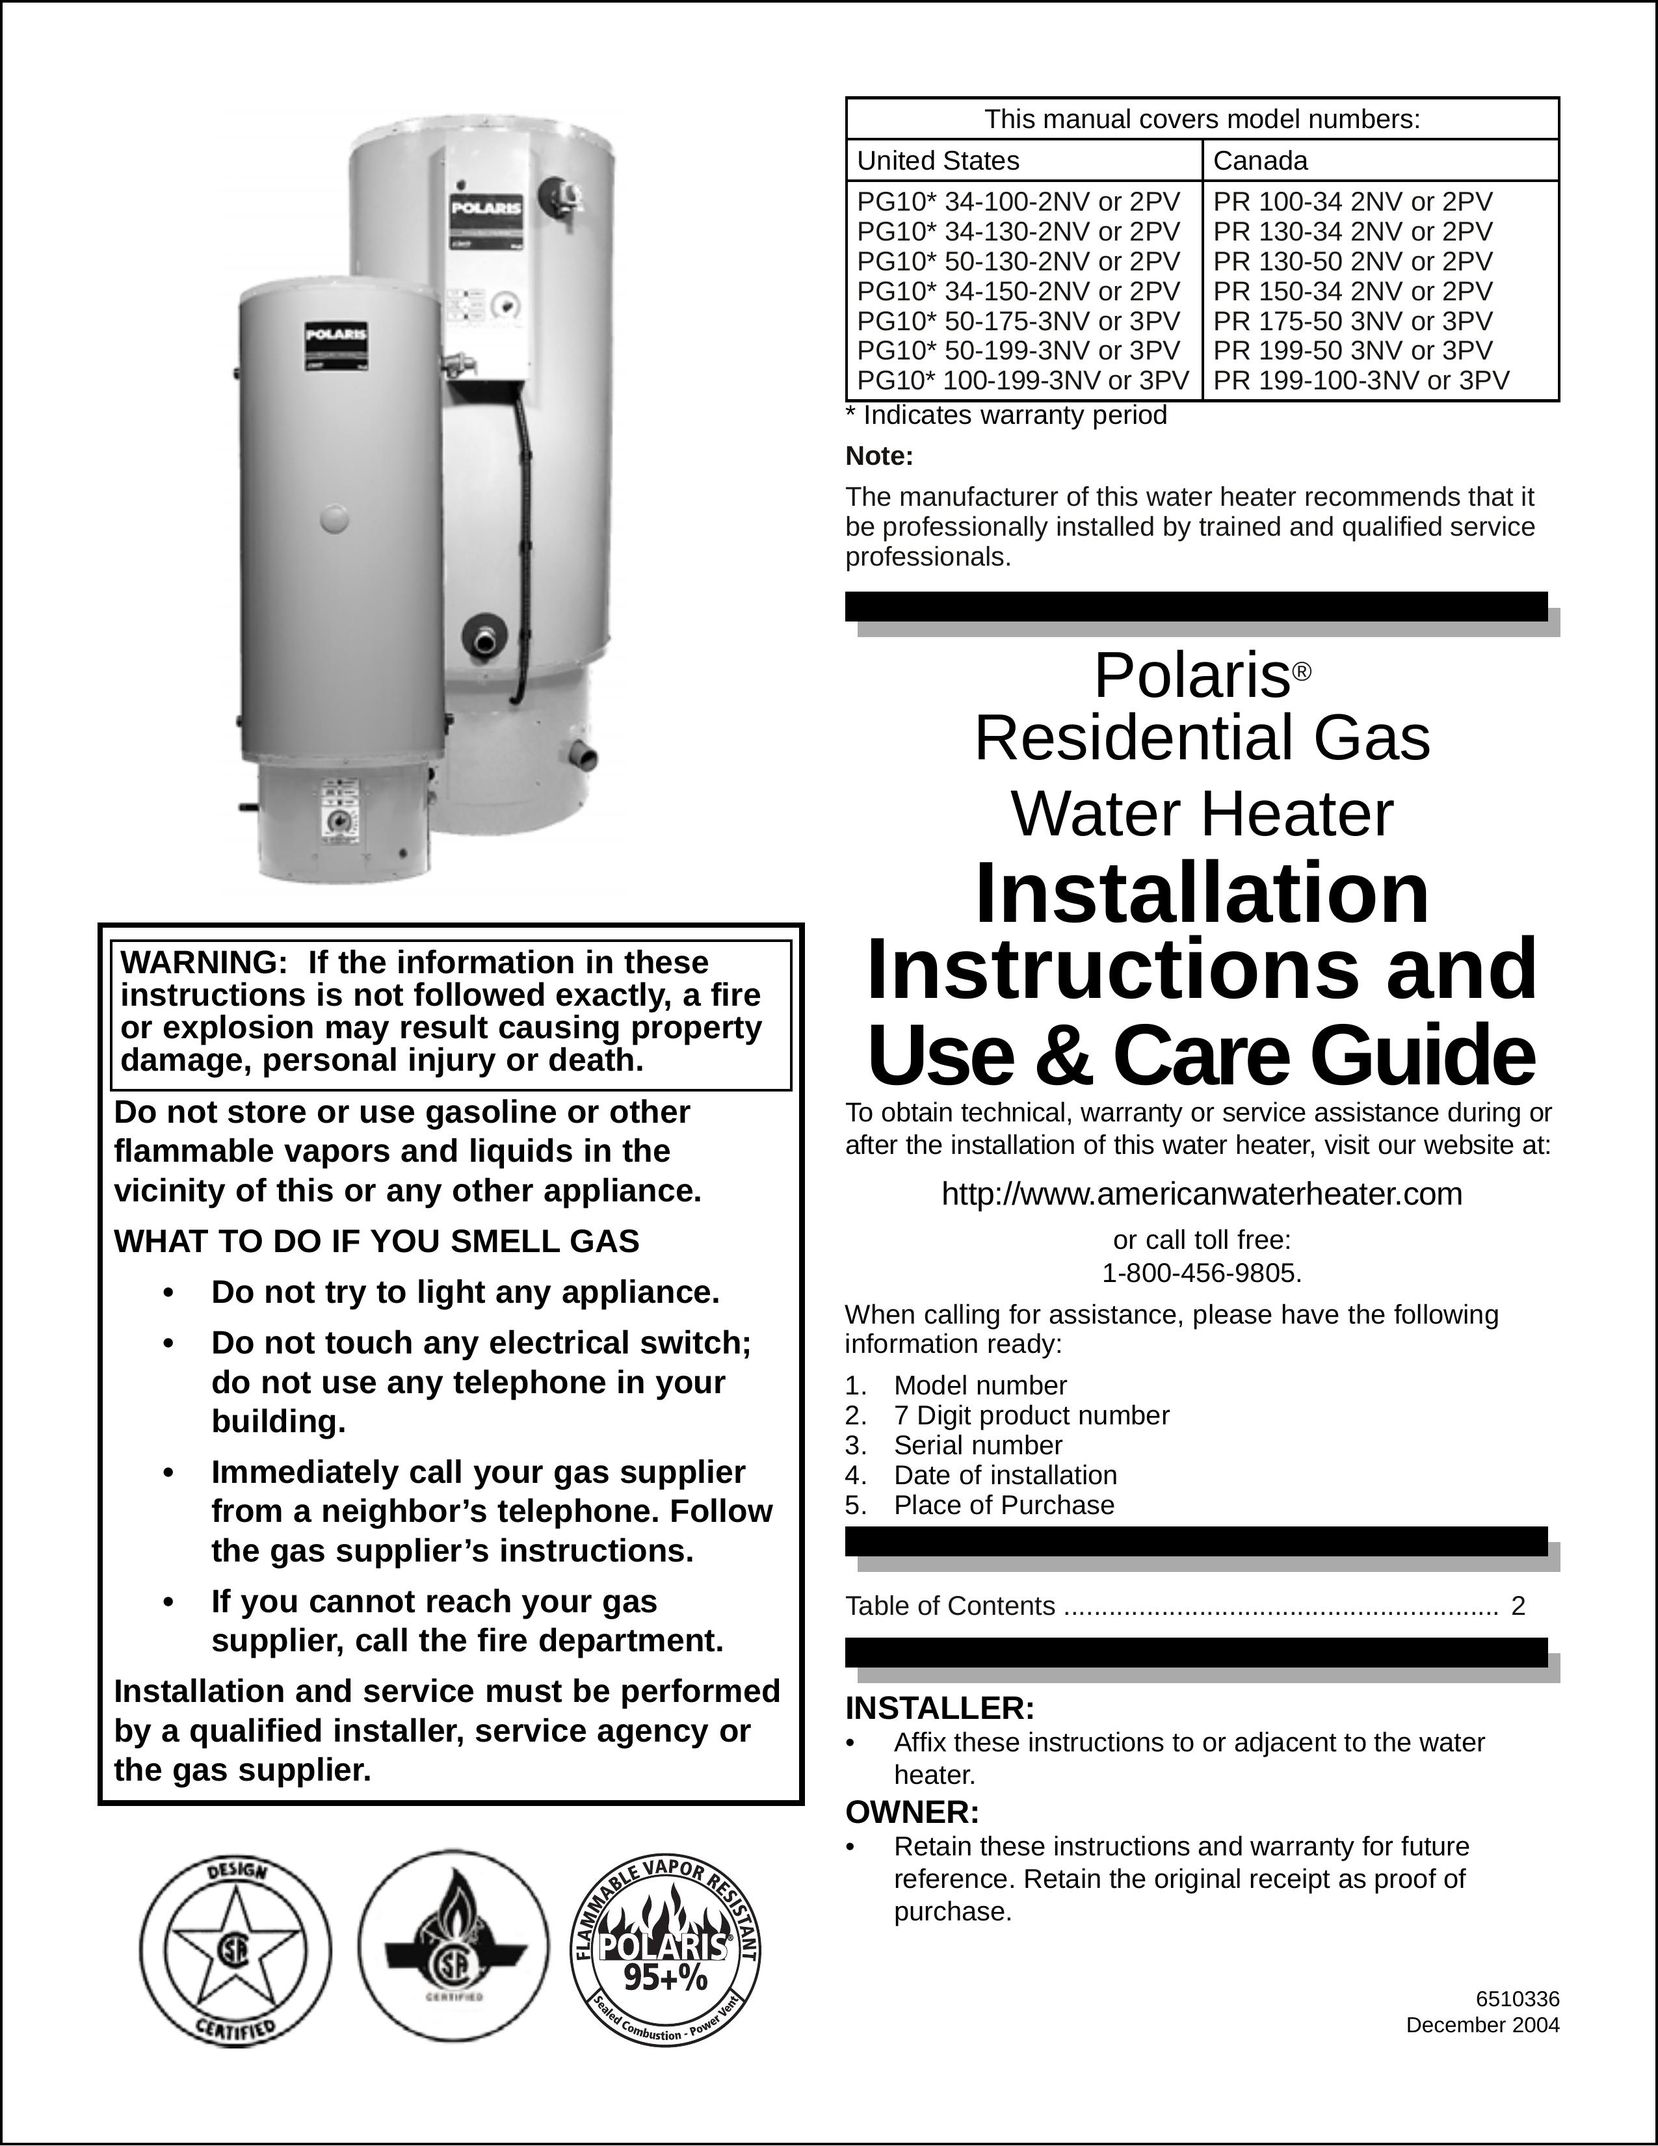 American International PR 130-50 2NV or 2PV Water Heater User Manual